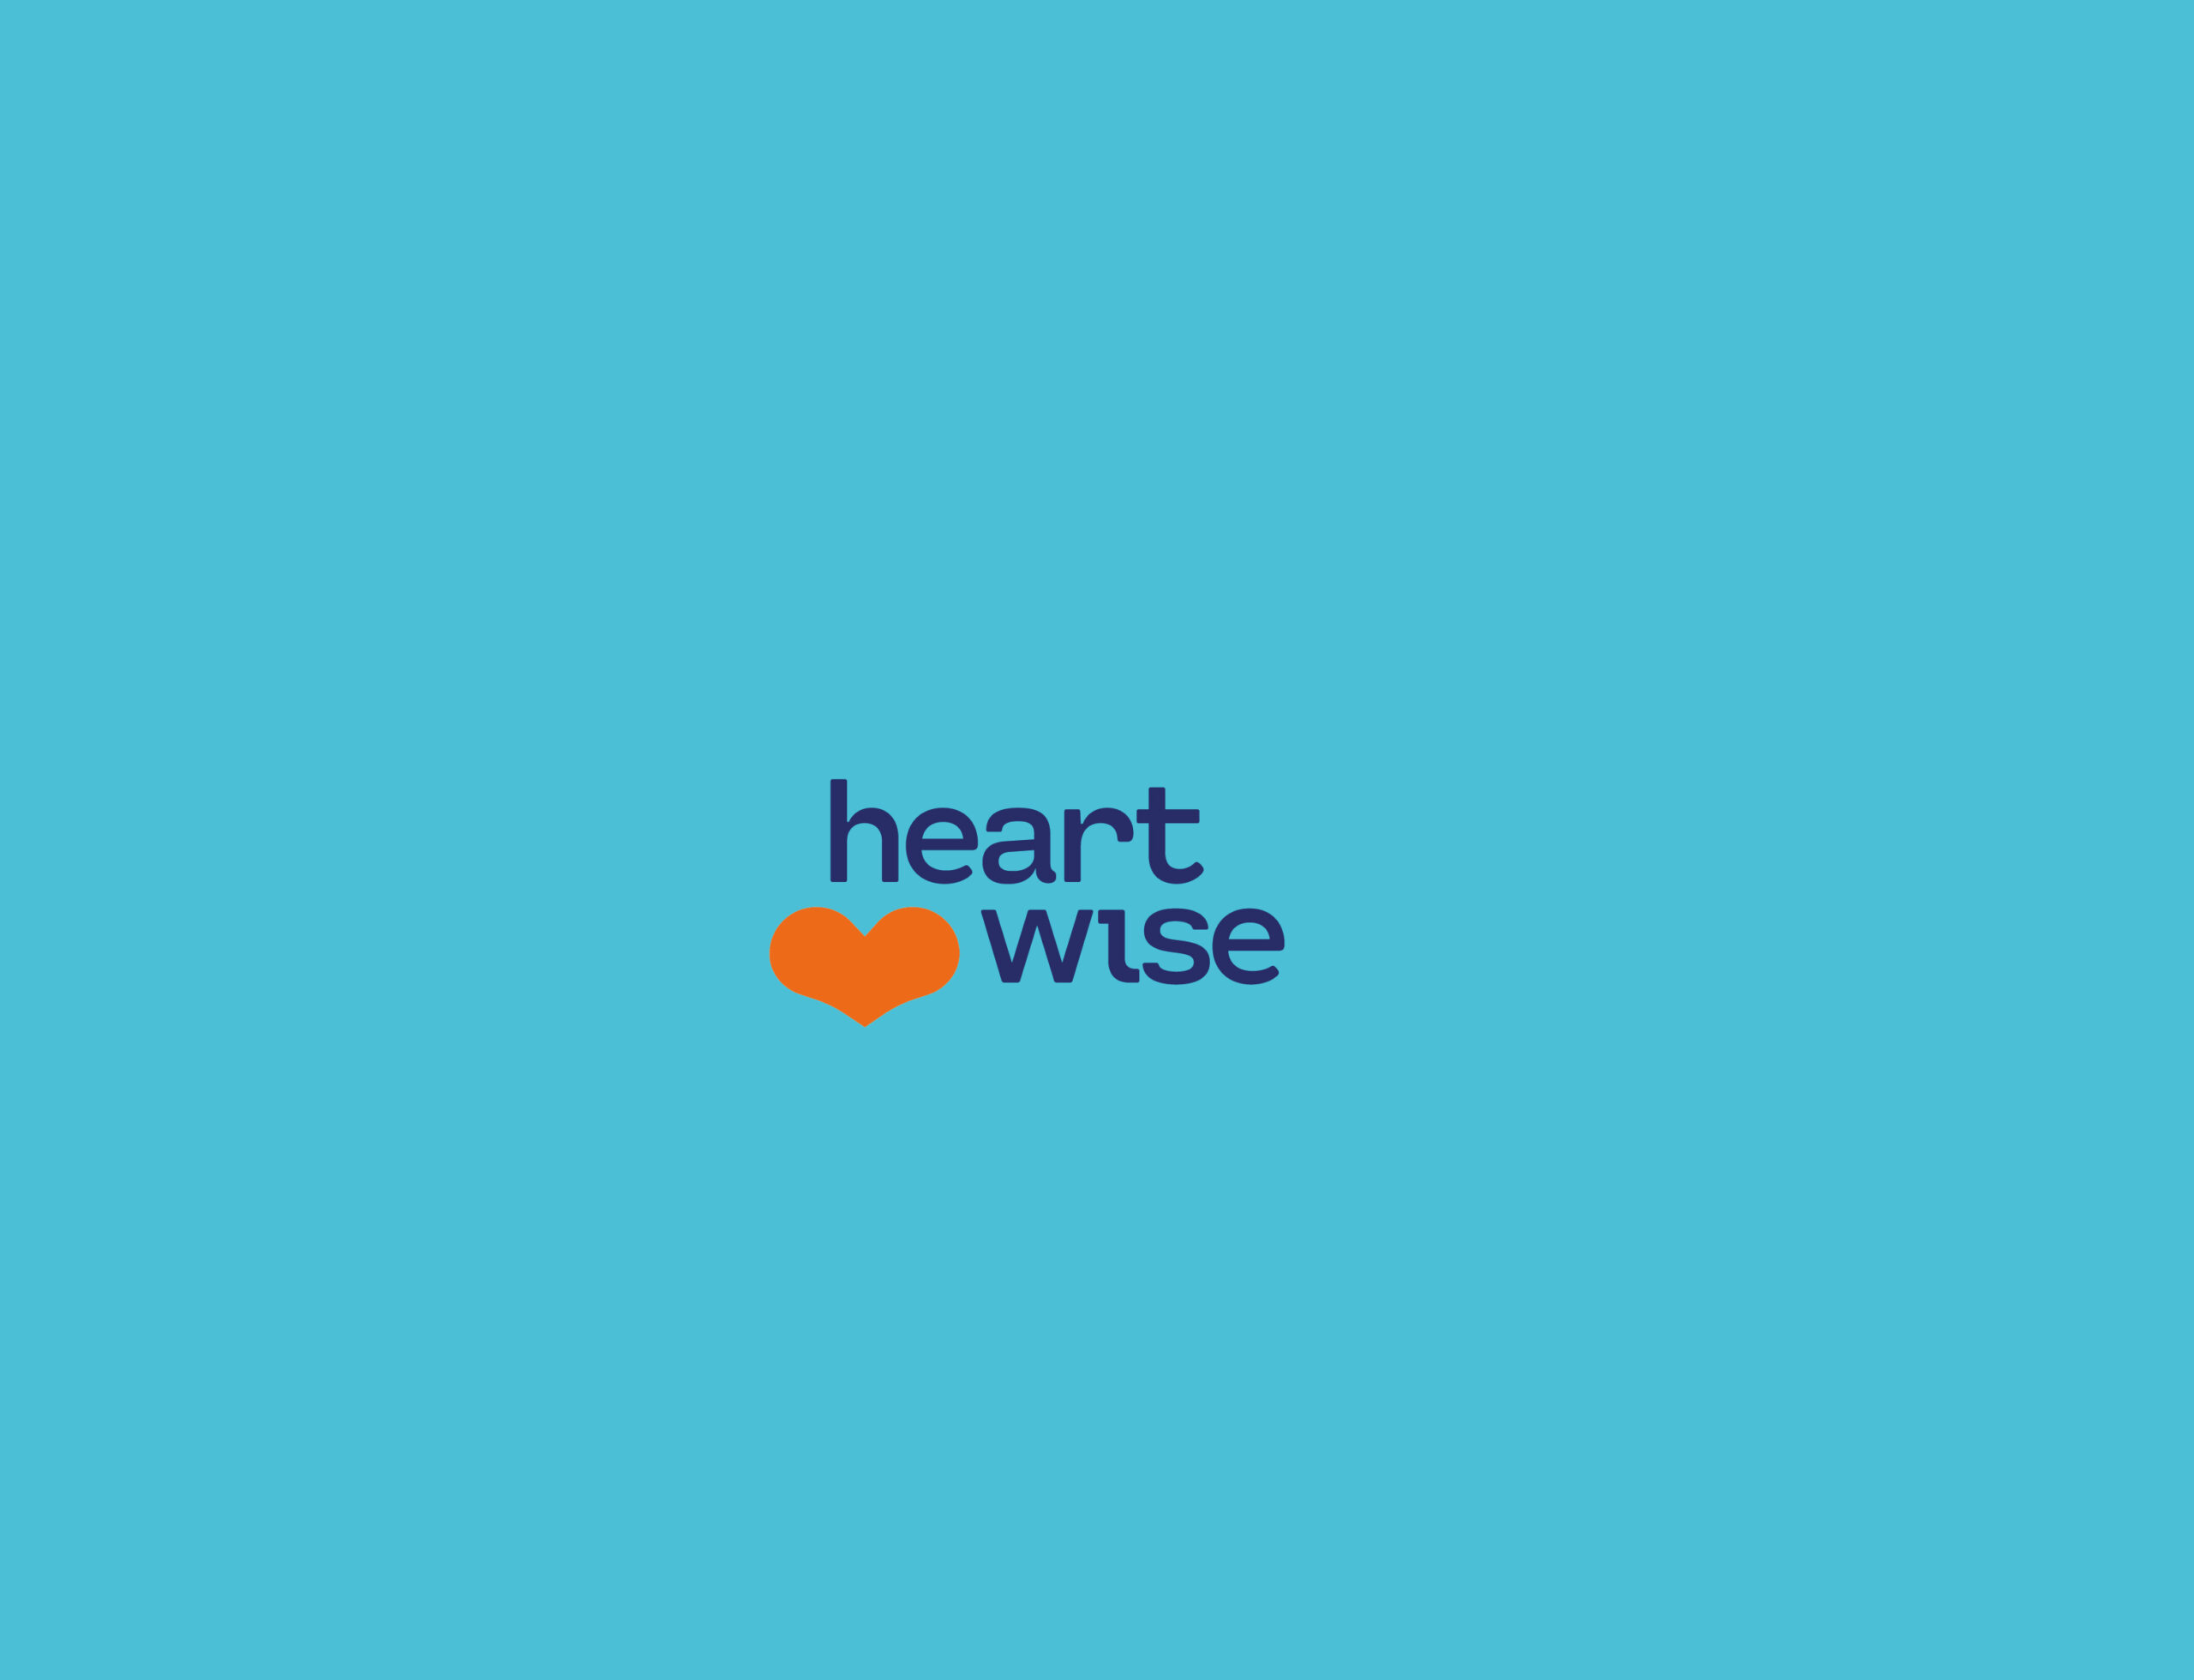 heartwise-presentation-21